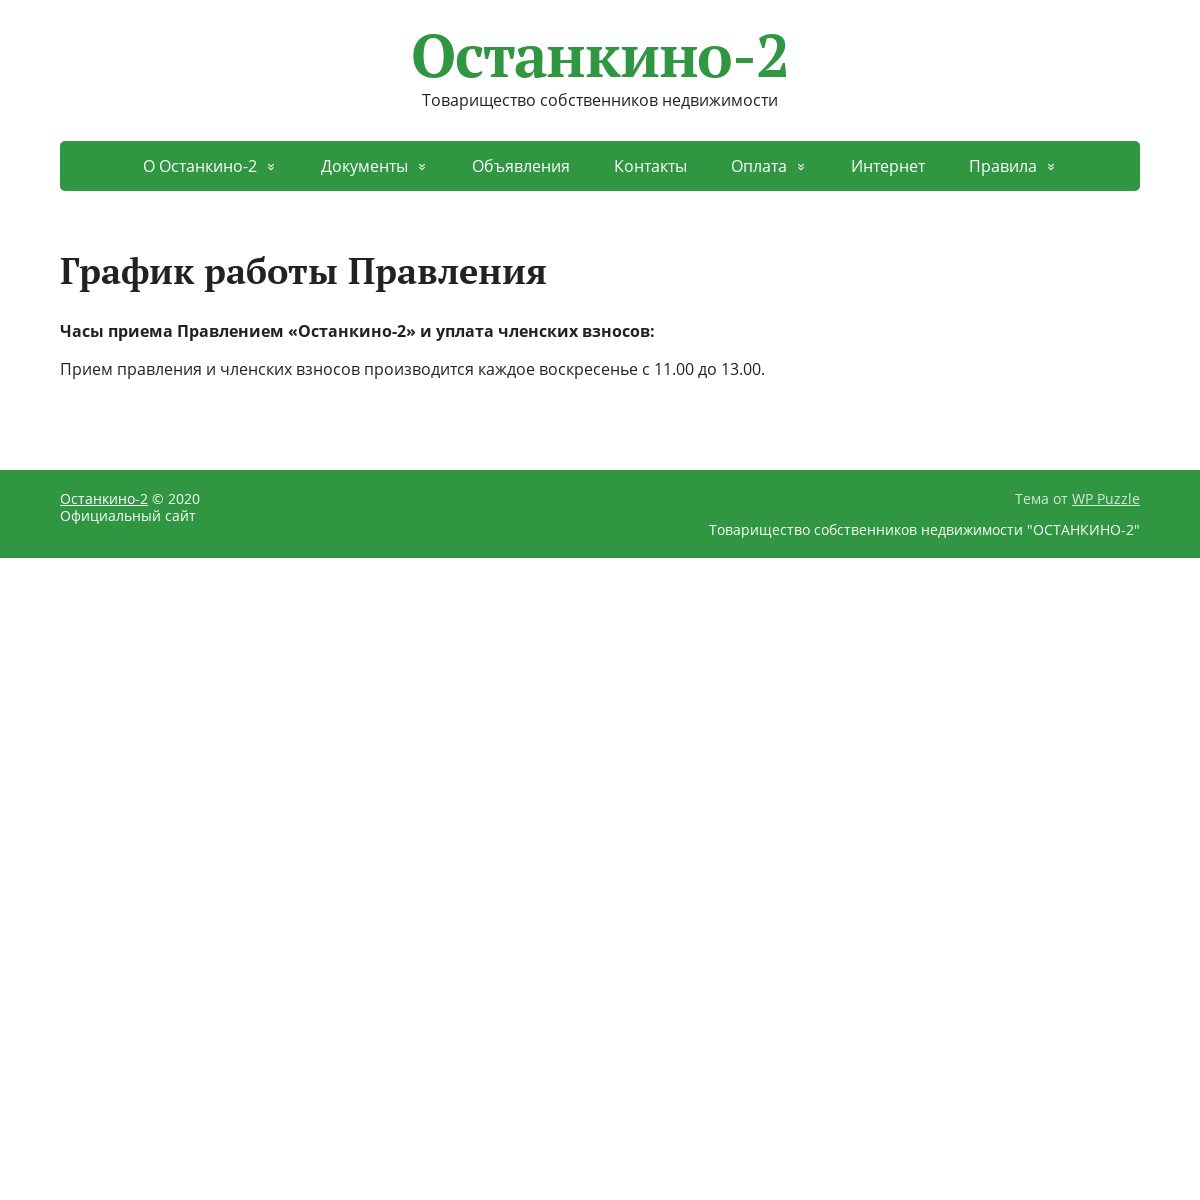 A complete backup of ostankino-2.ru